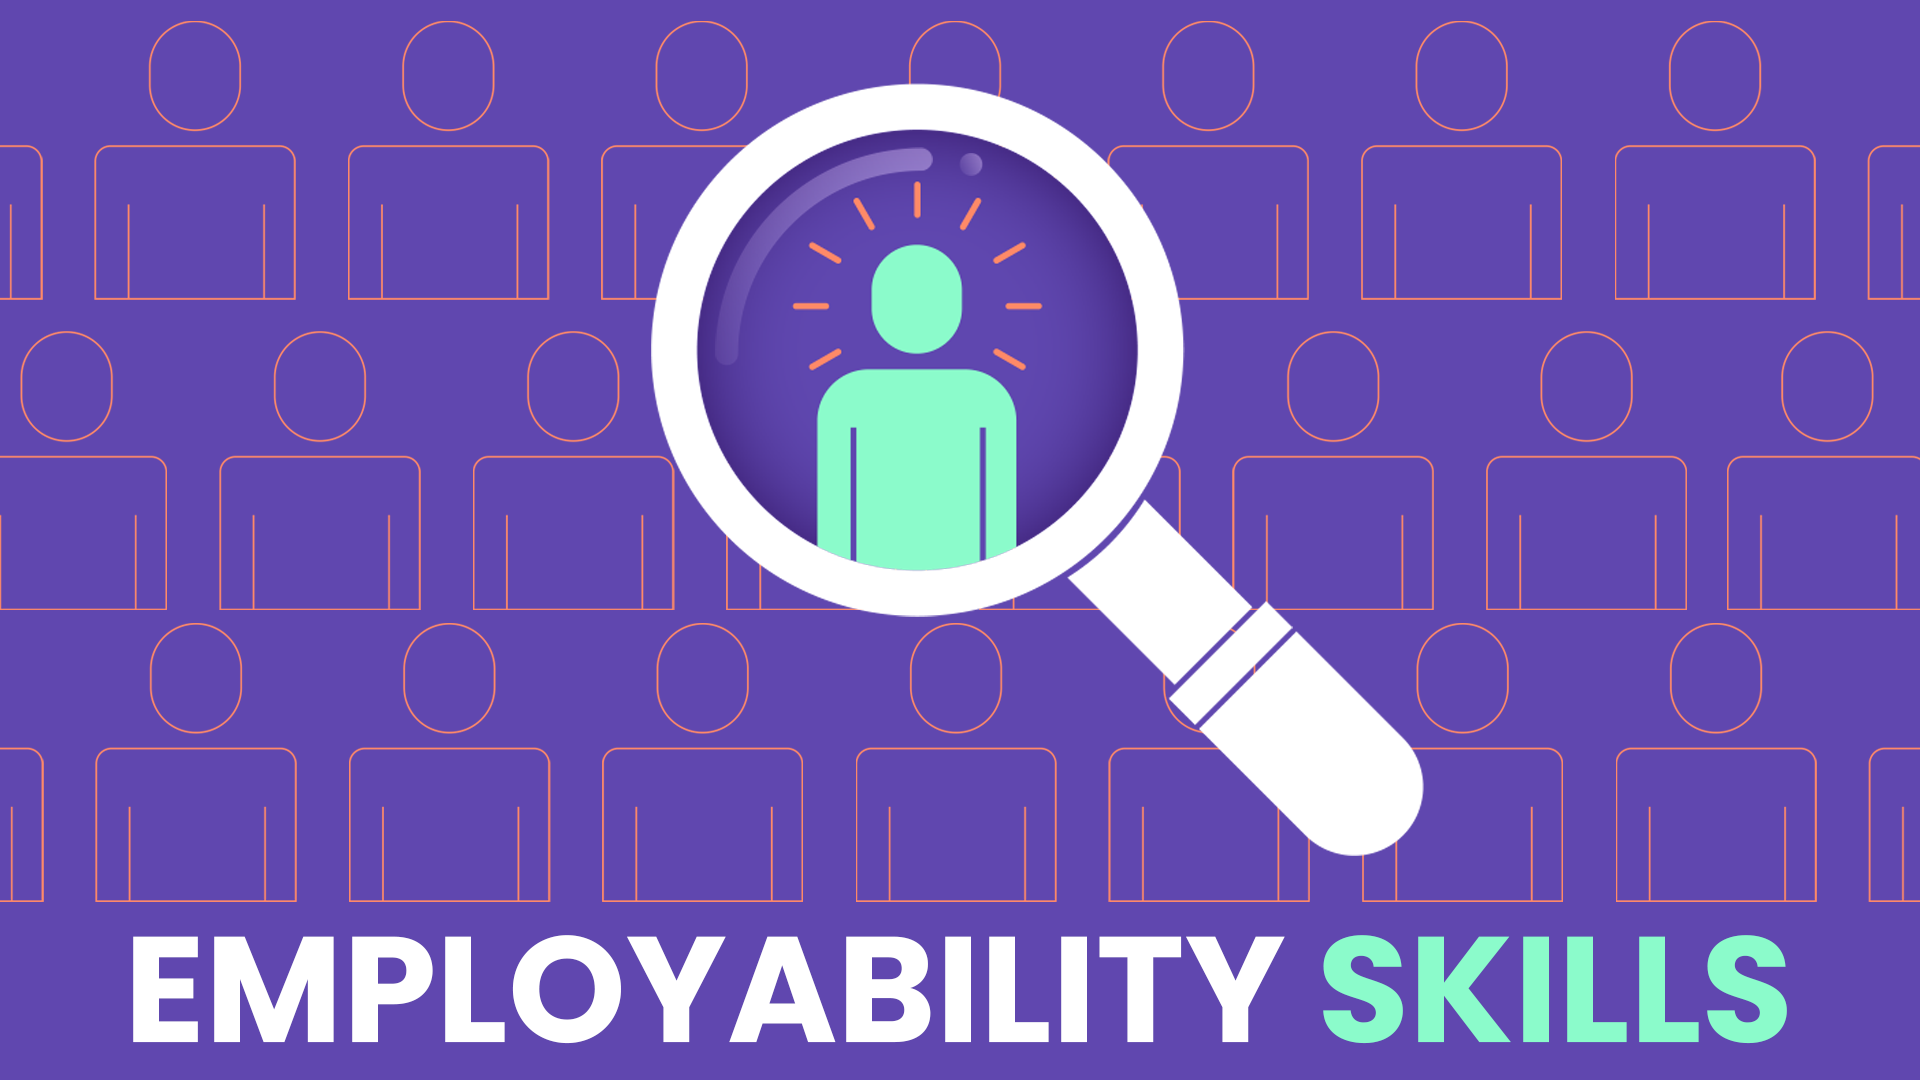 What are Employability Skills